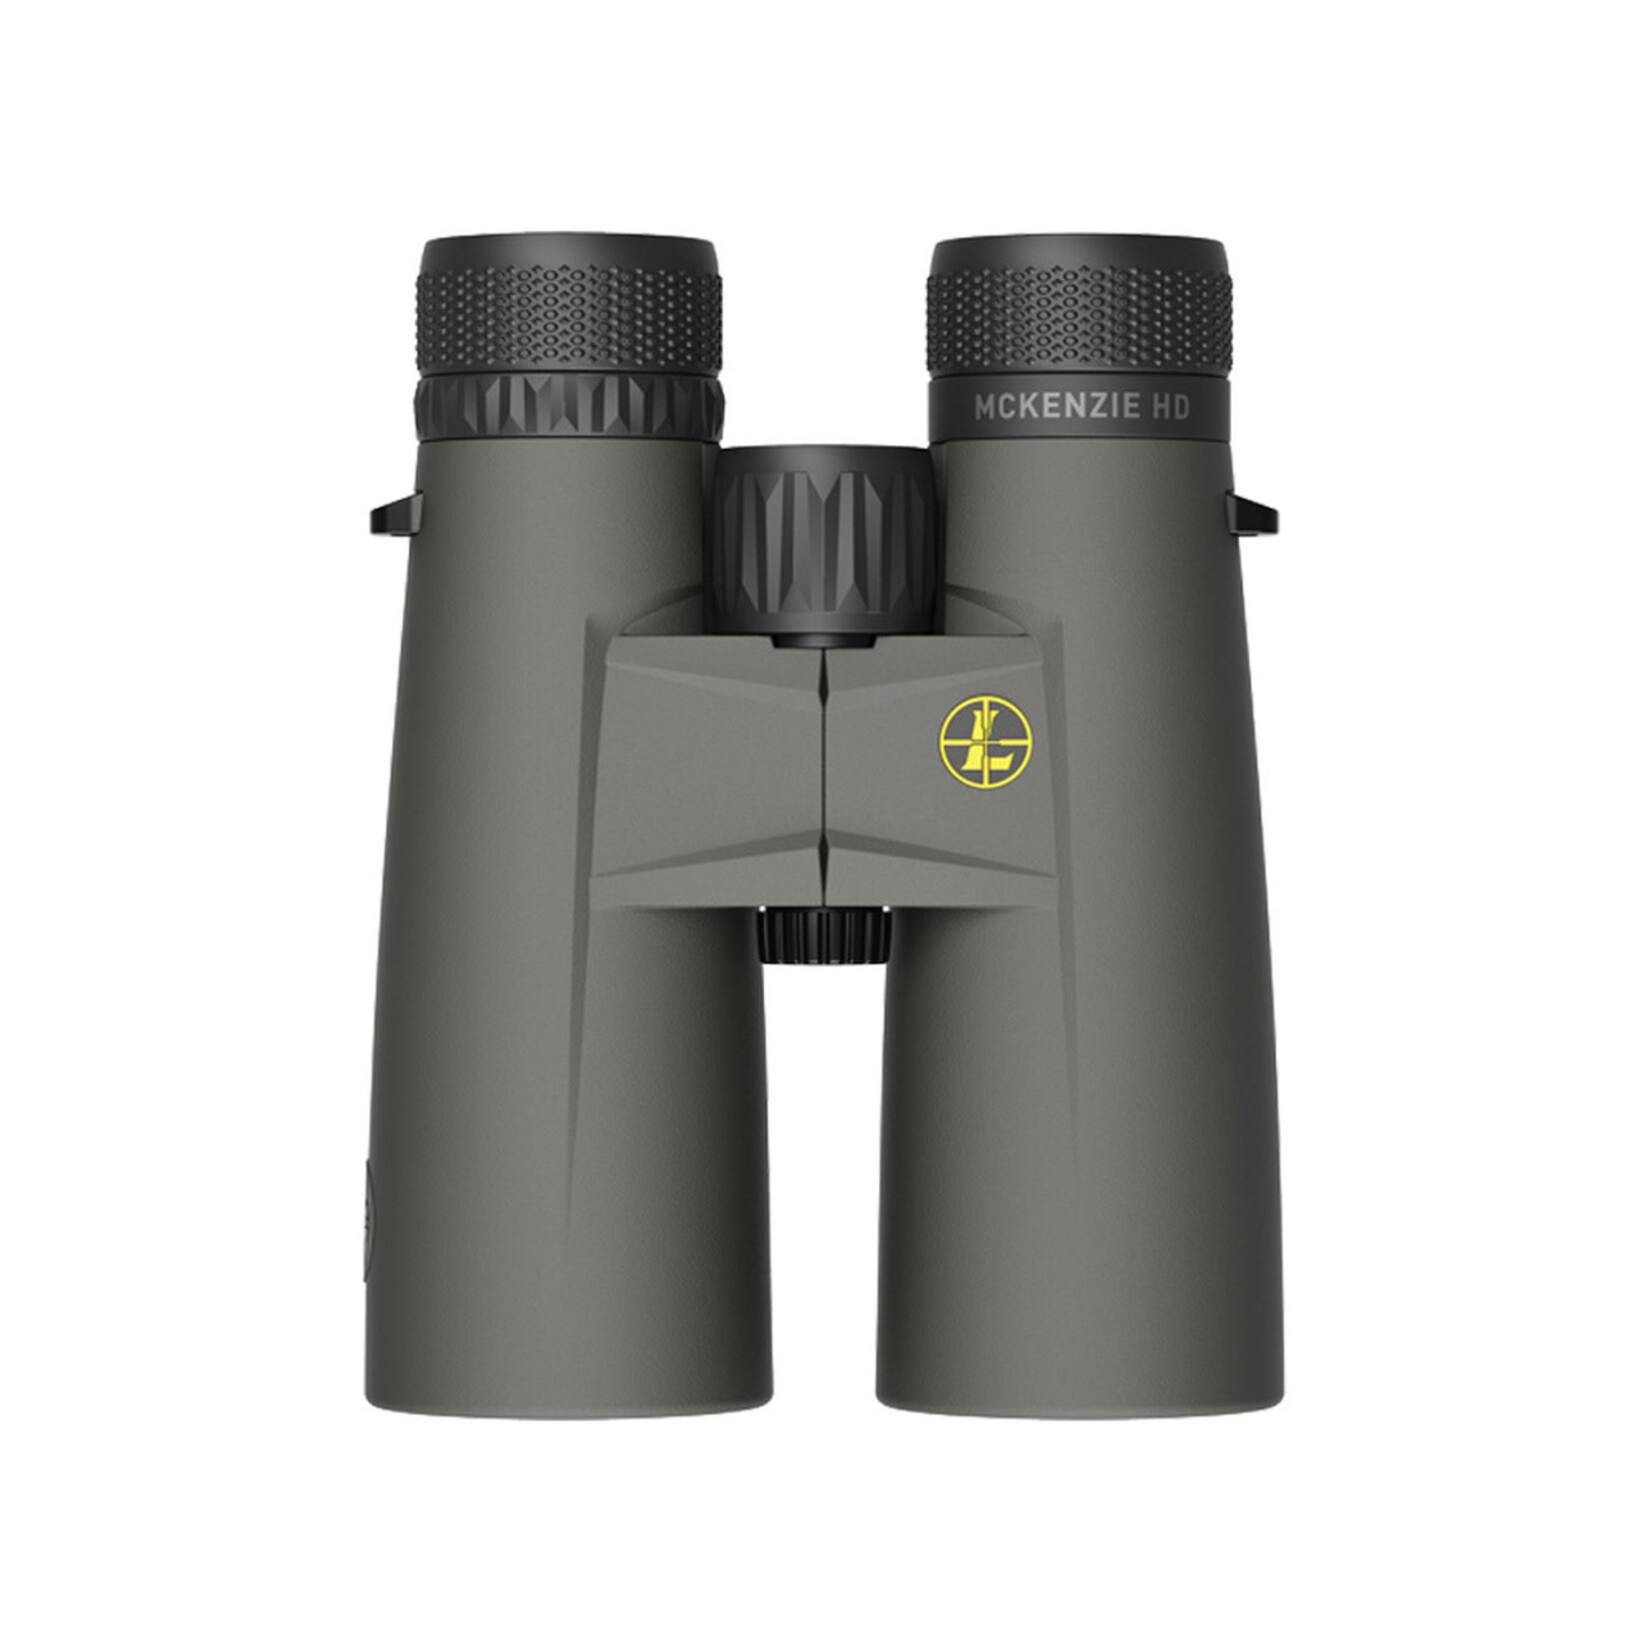 Leupold Leupold BX-1 McKenzie HD 12x50 Binoculars